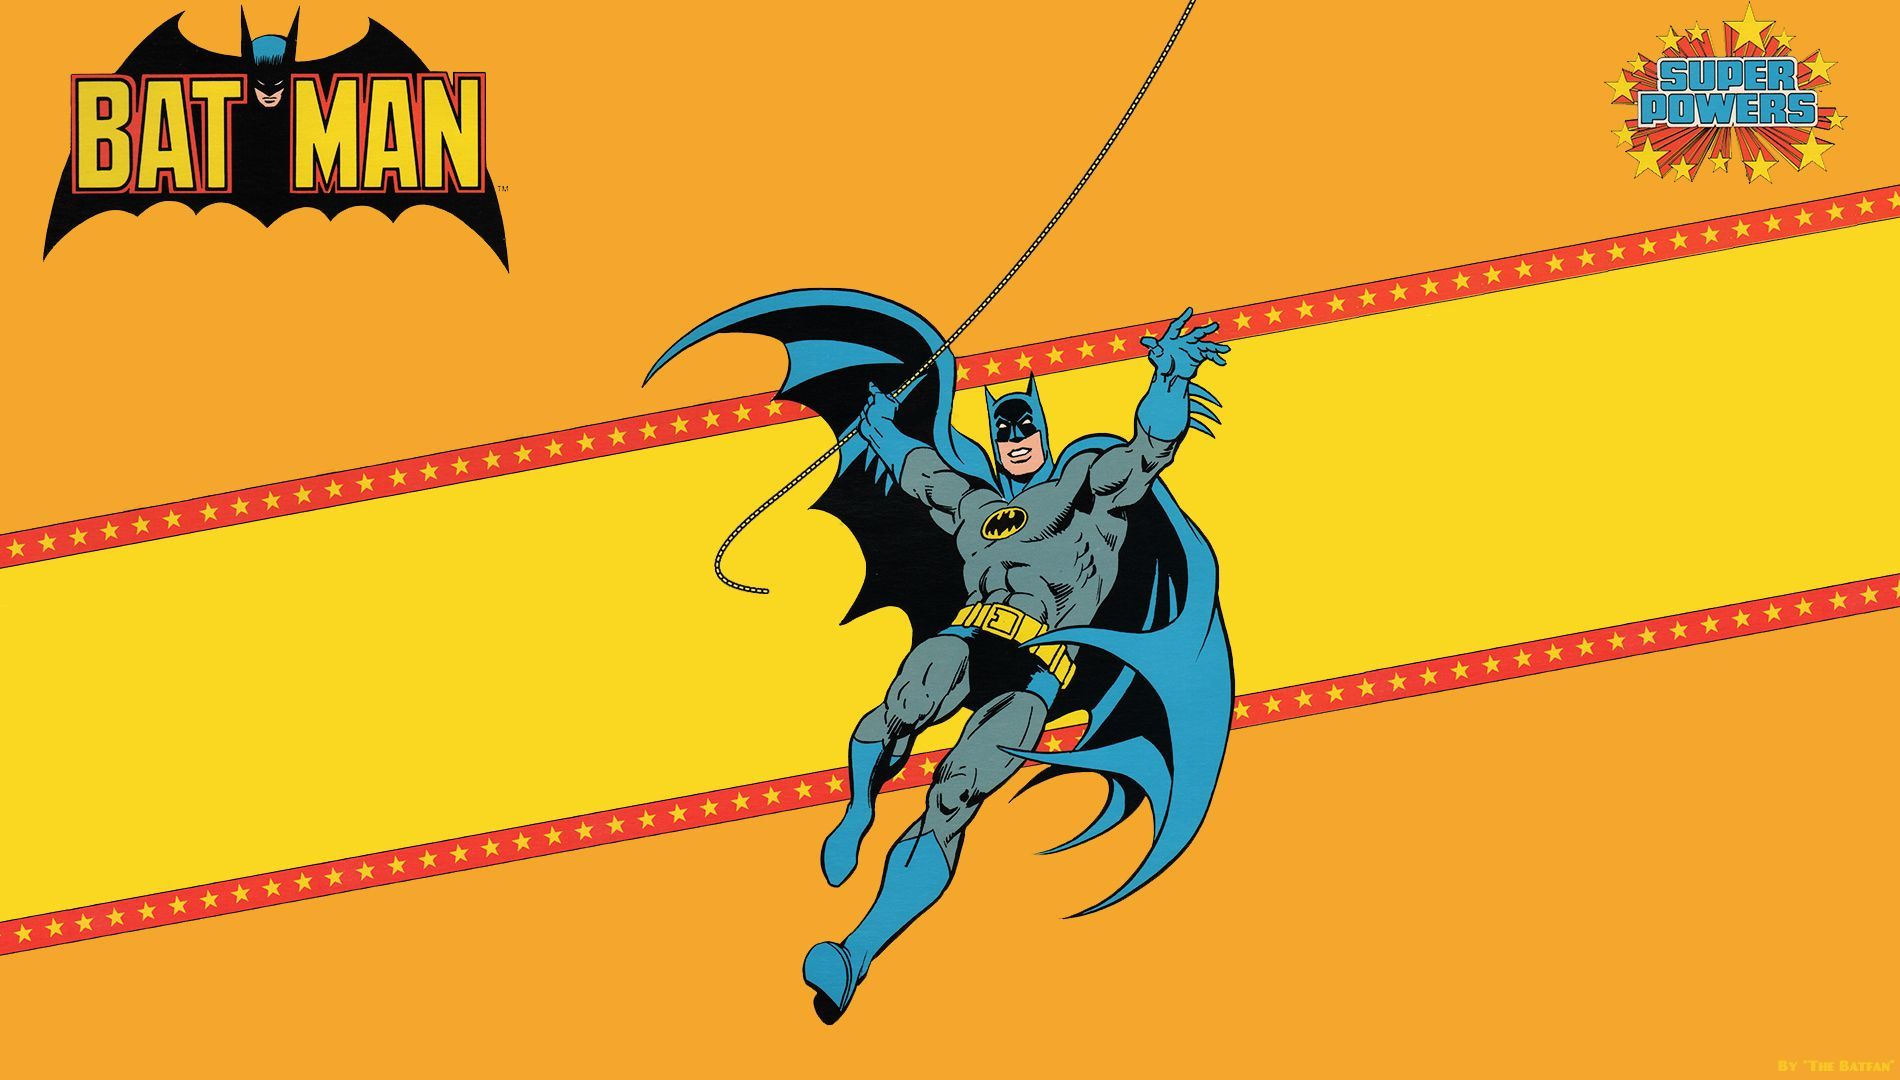 Super powers Batman wallpaper based on a coloring book cover. Batman wallpaper, Coloring books, Super powers